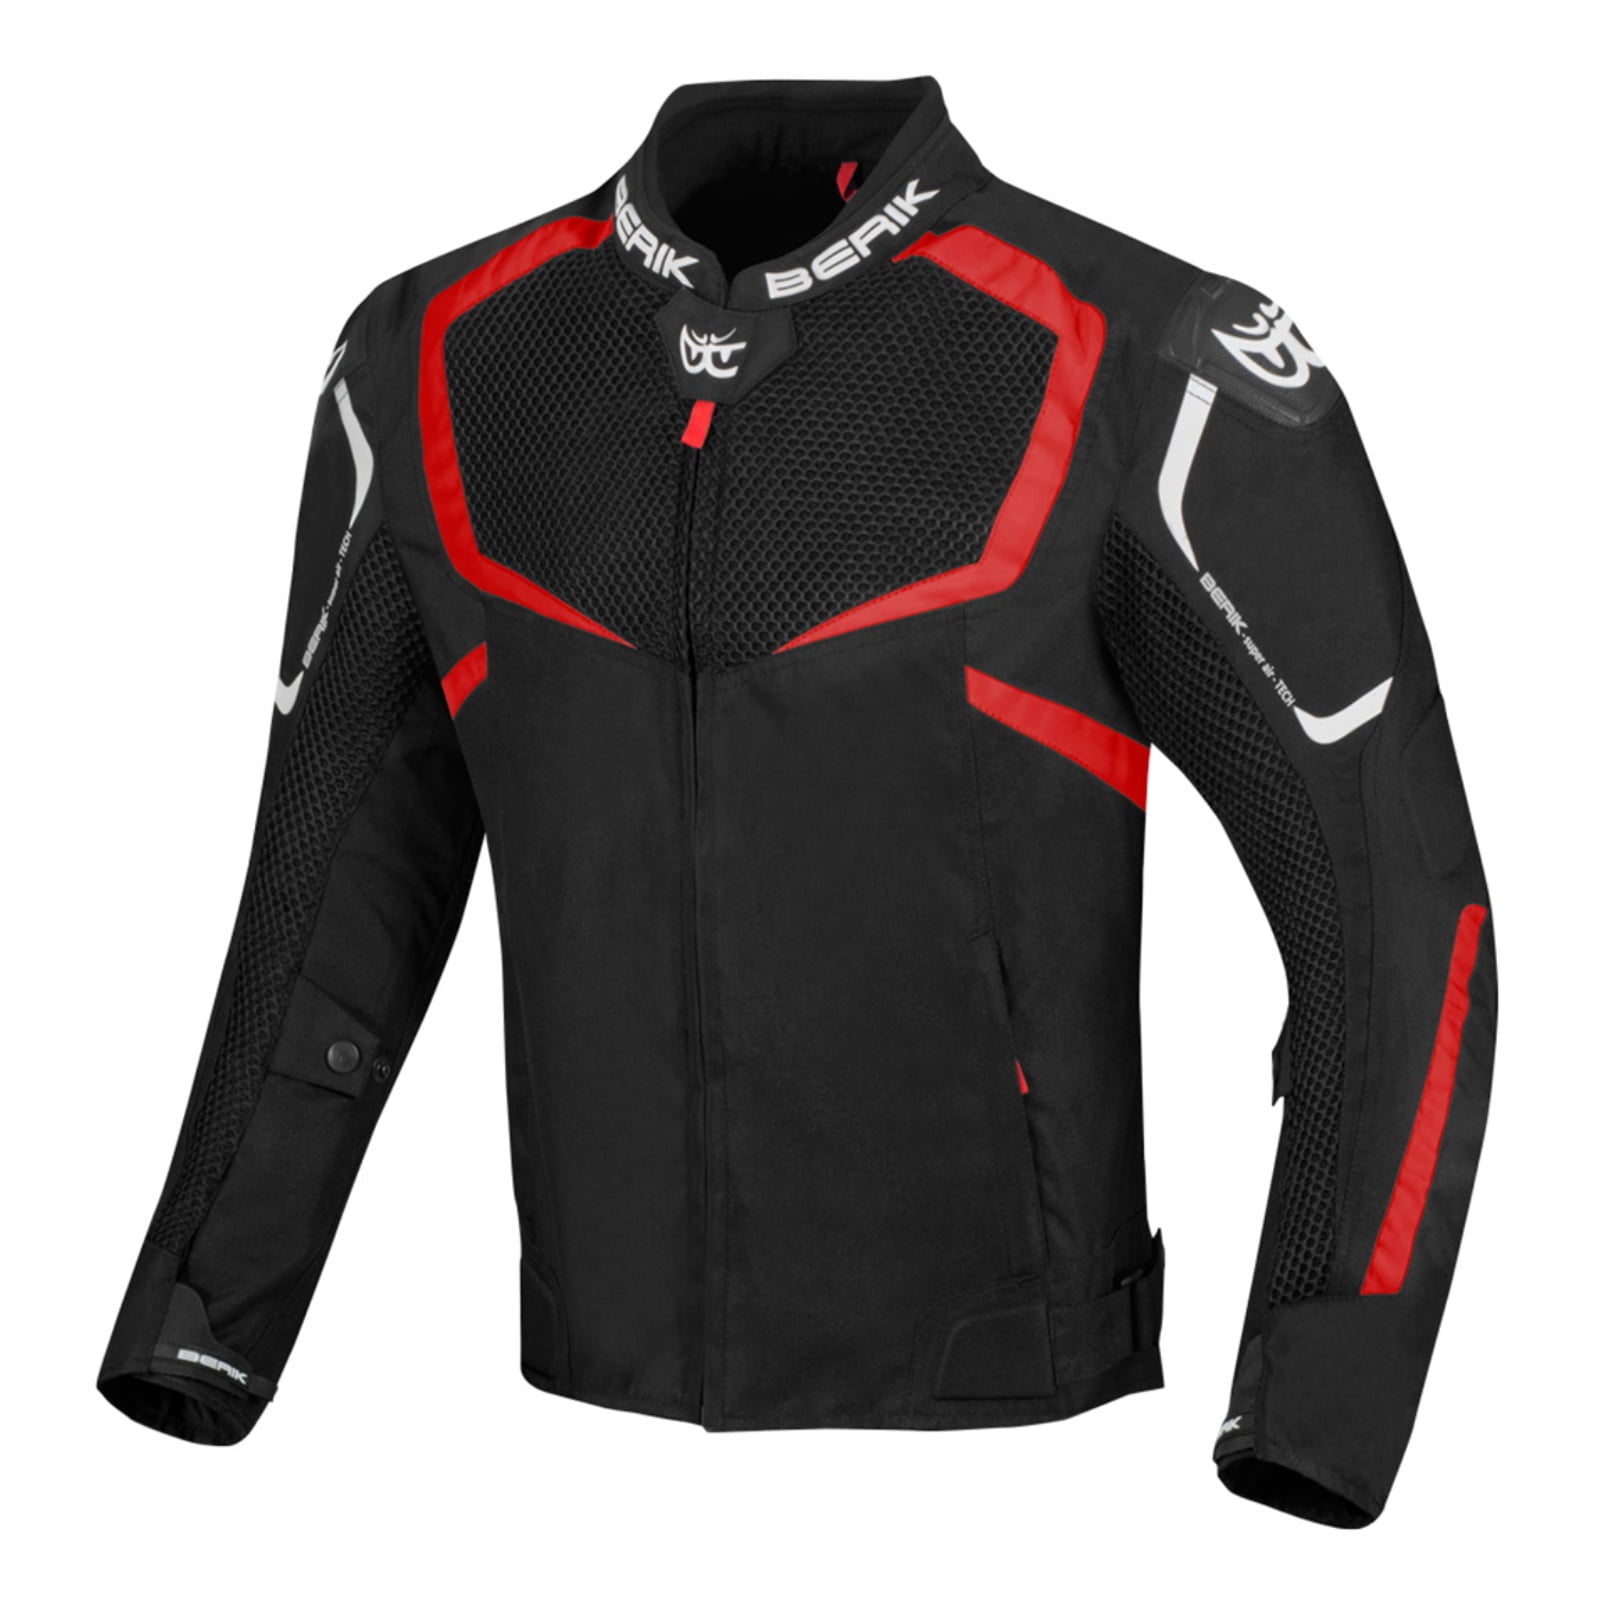 Berik X-Speed Air Motorcycle Textile Jacket（ベリック エックス 